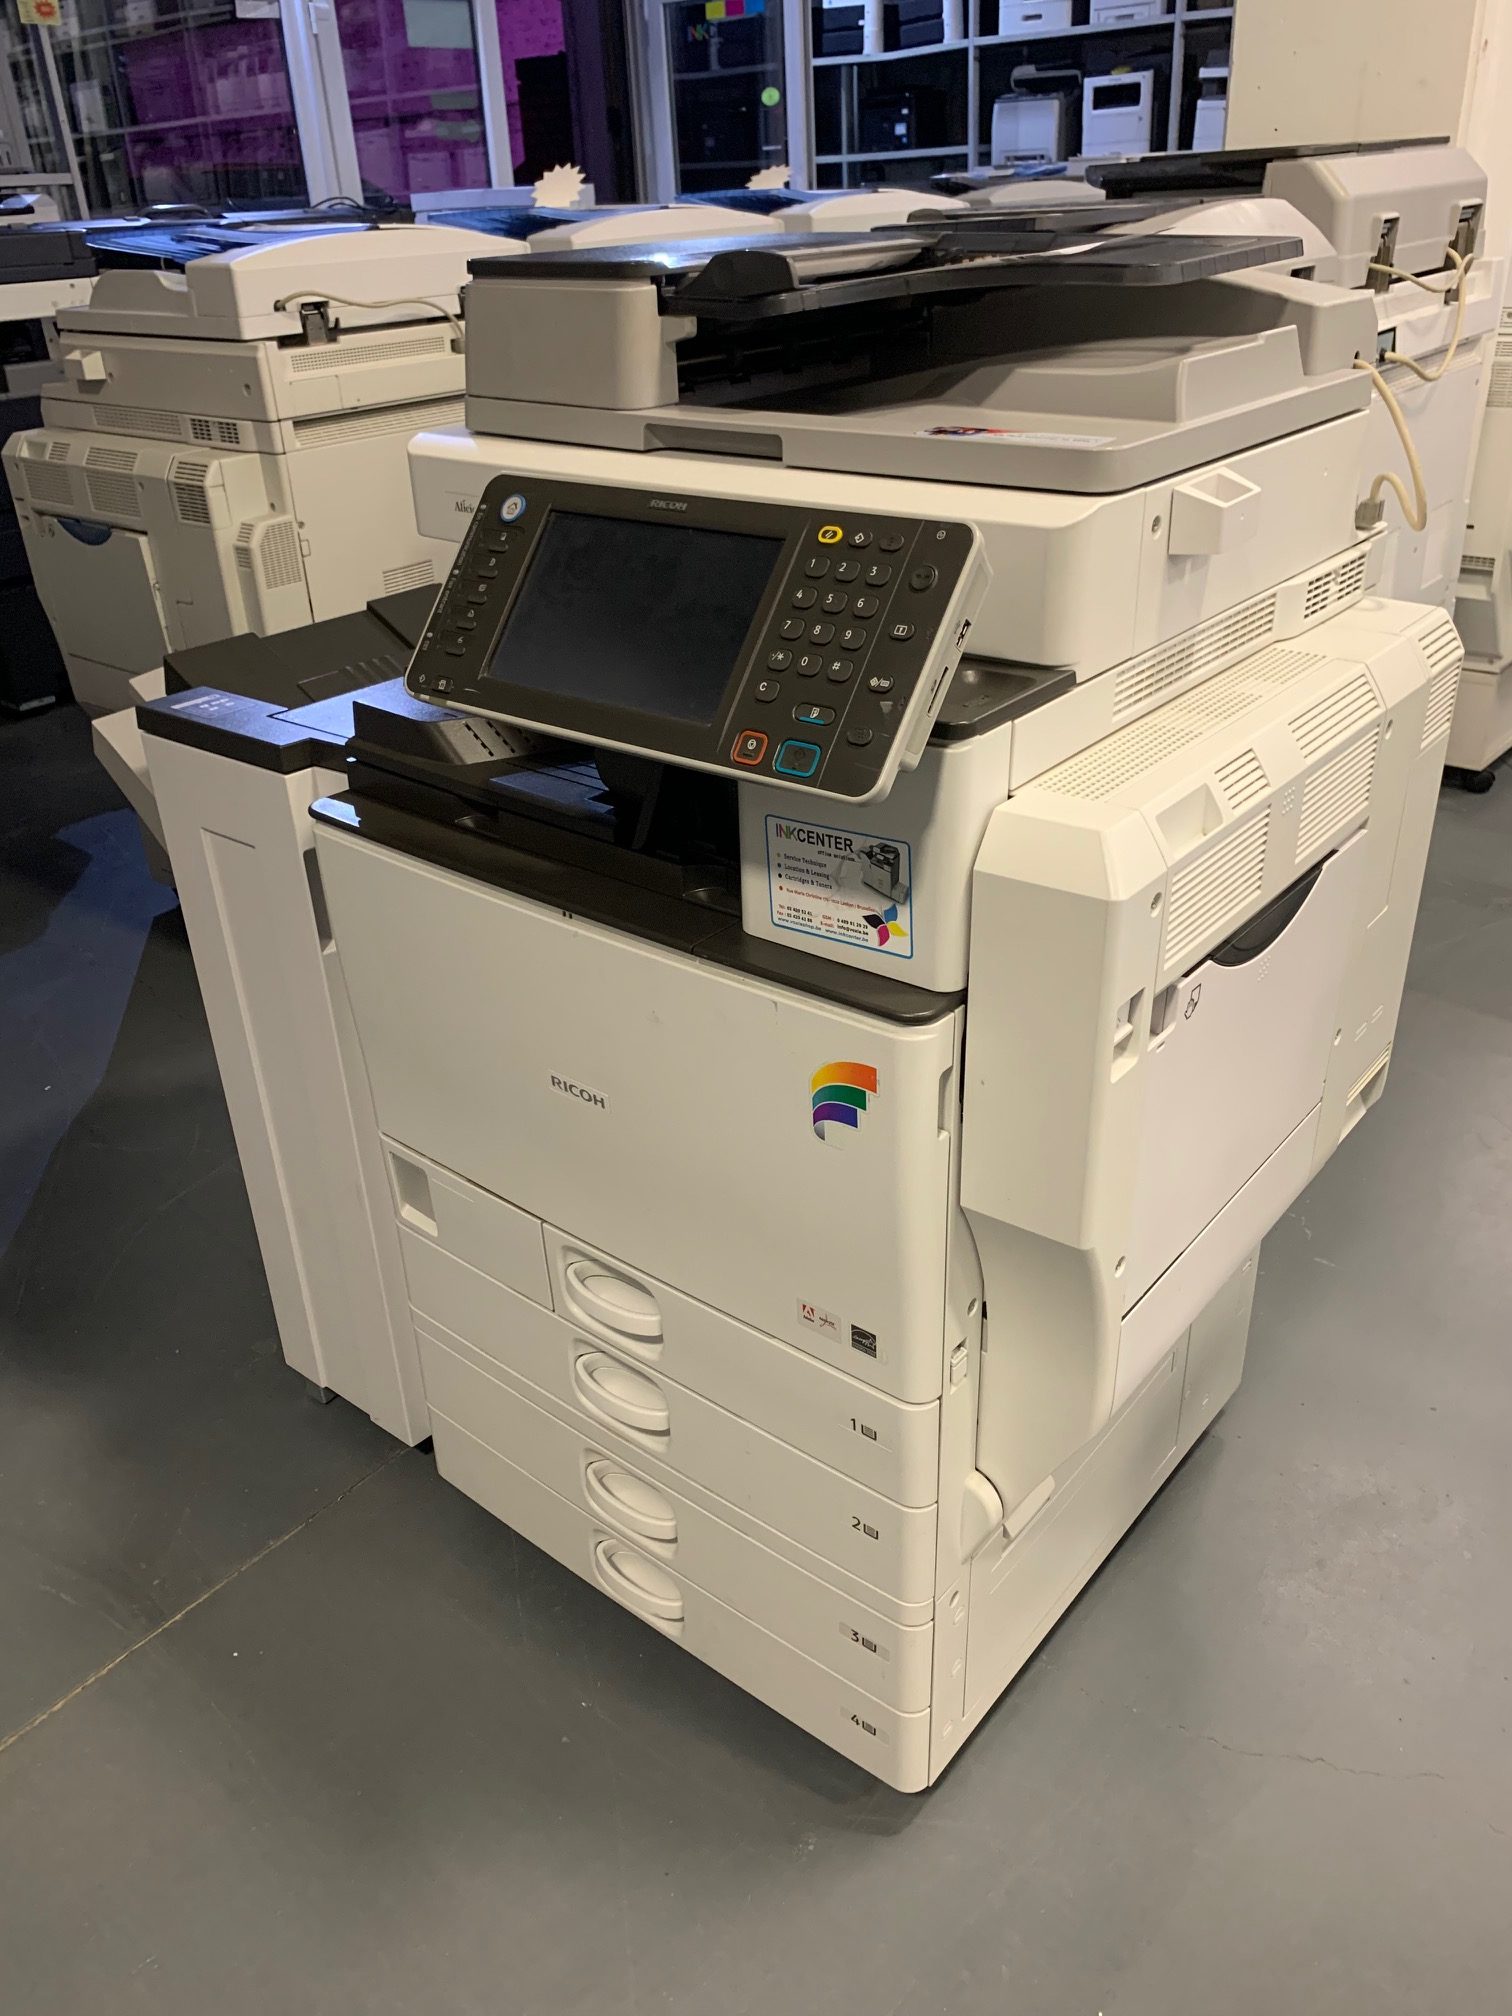 Imprimantes multifonctions laser